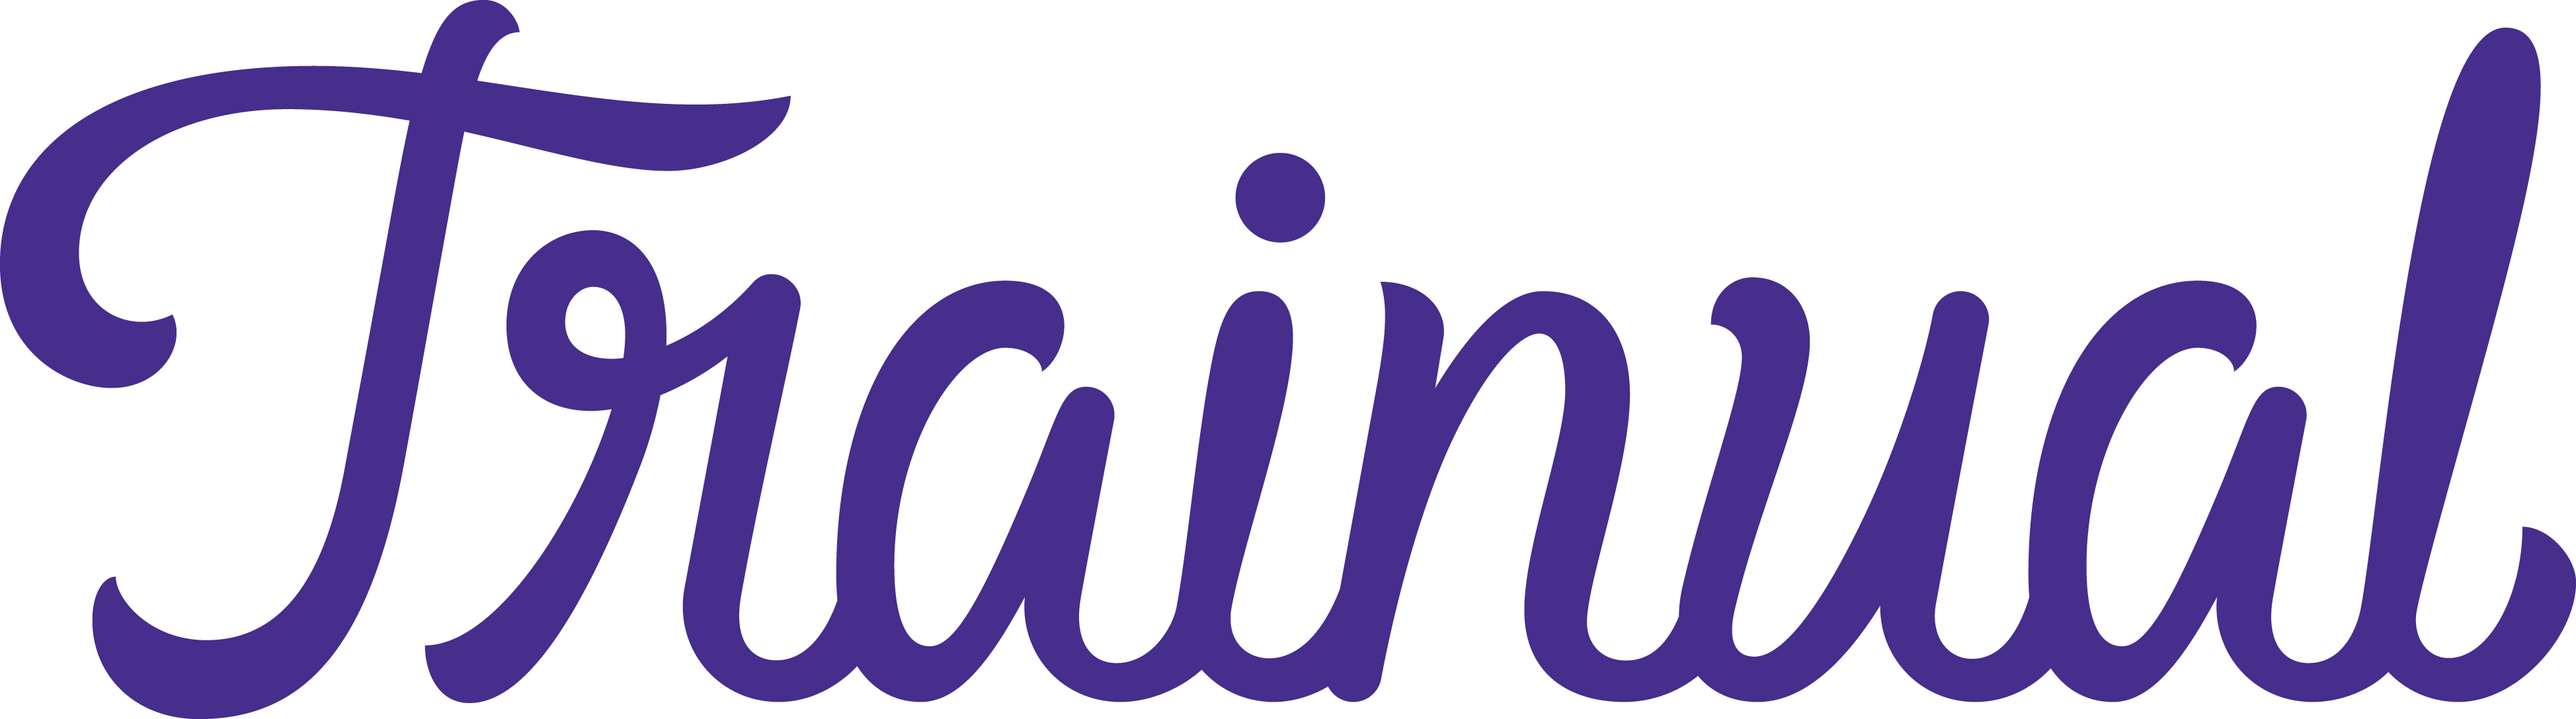 Trainual logo